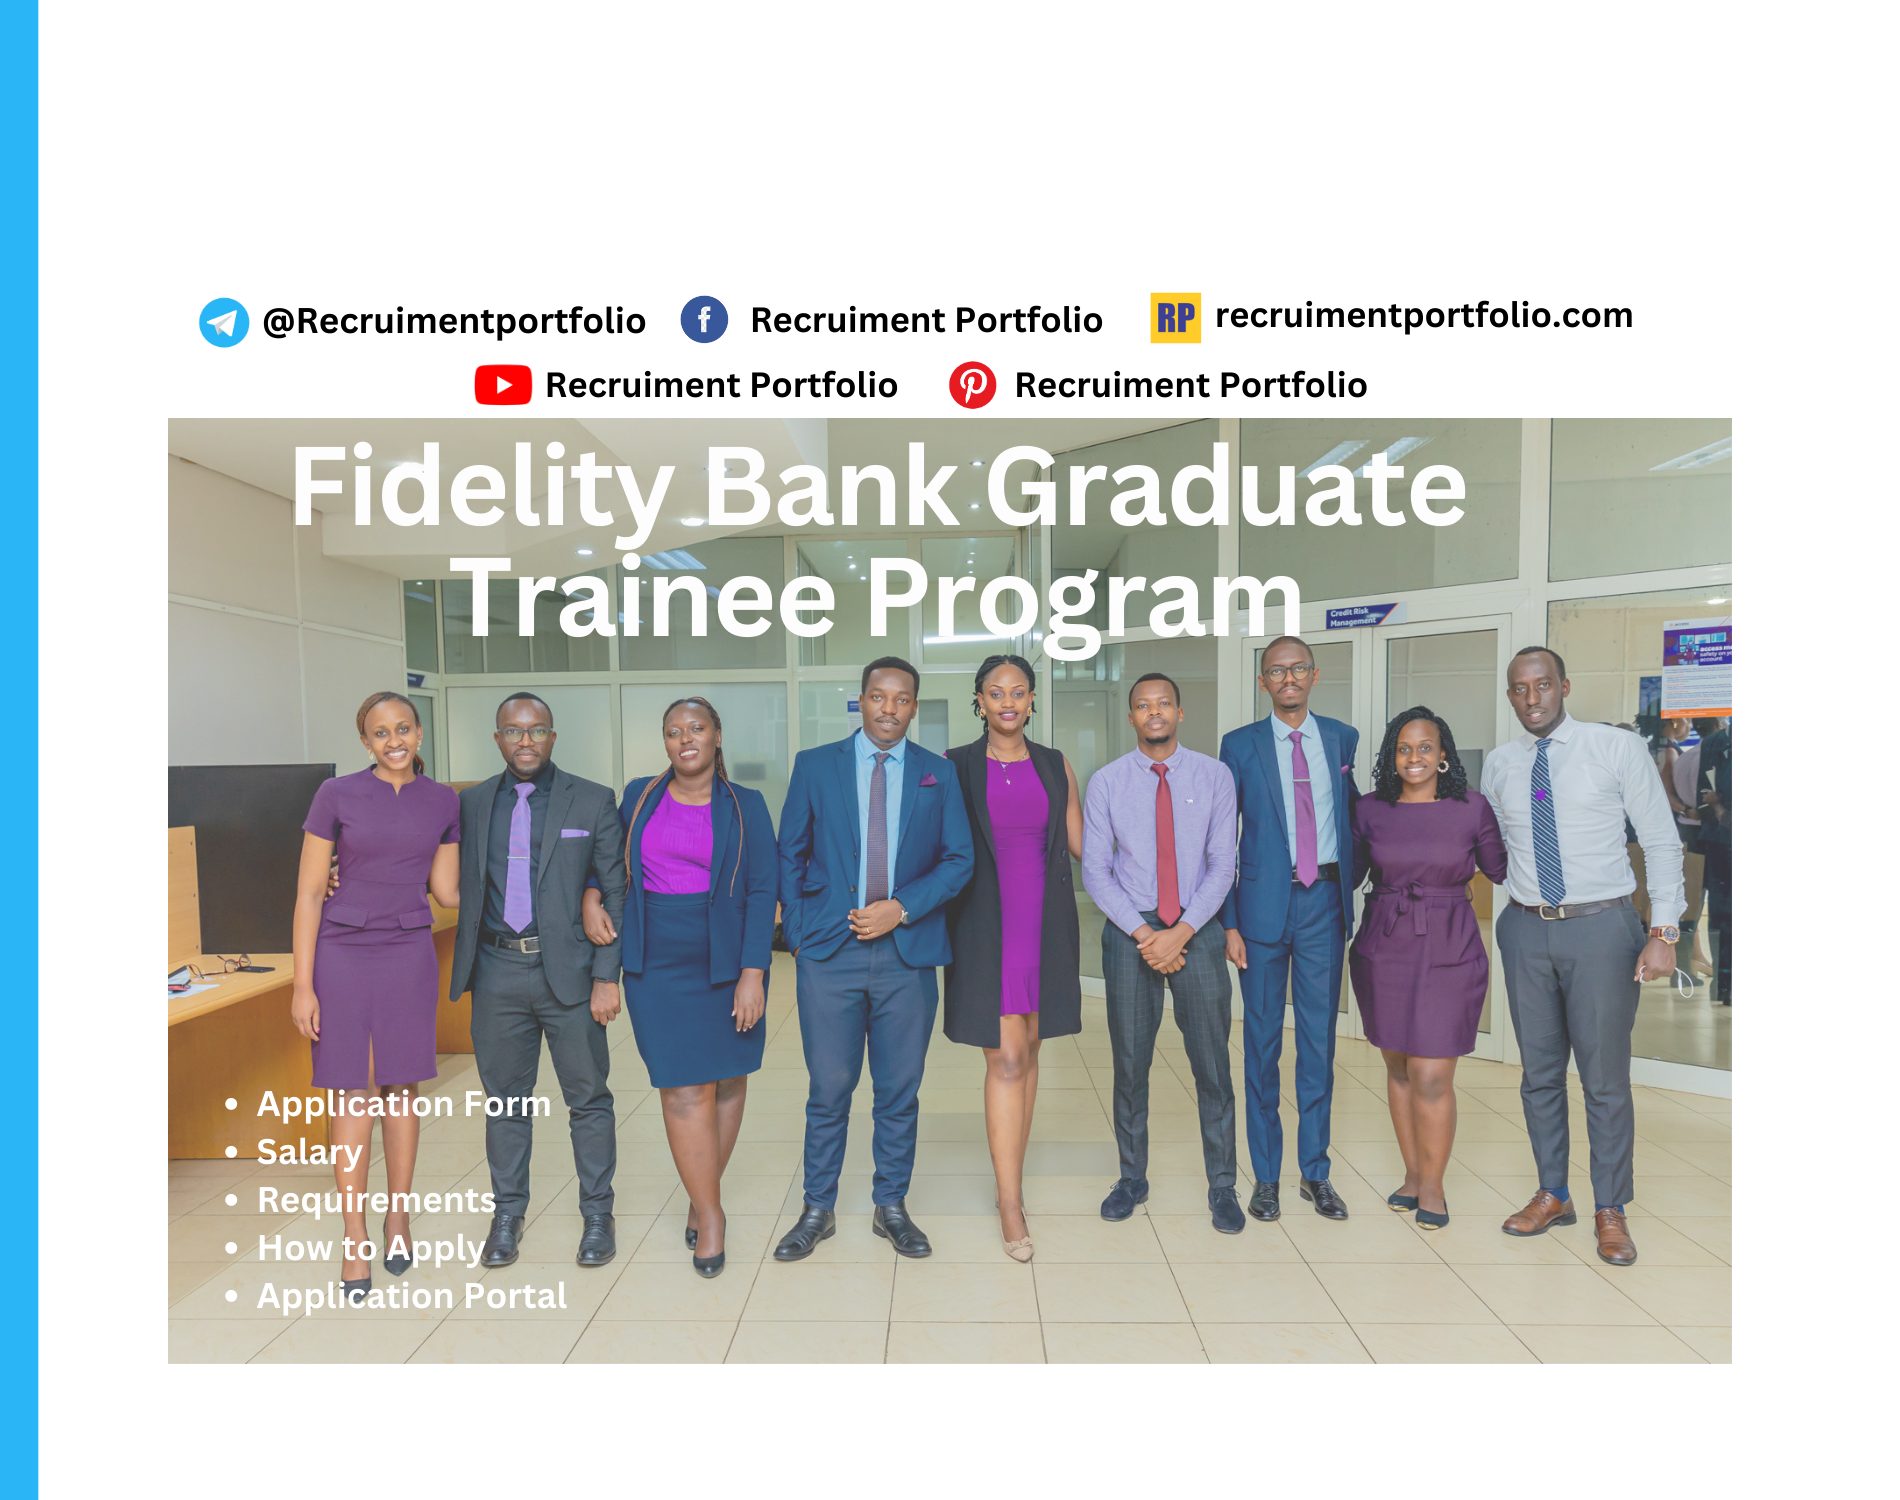 Fidelity Bank Graduate Trainee Program